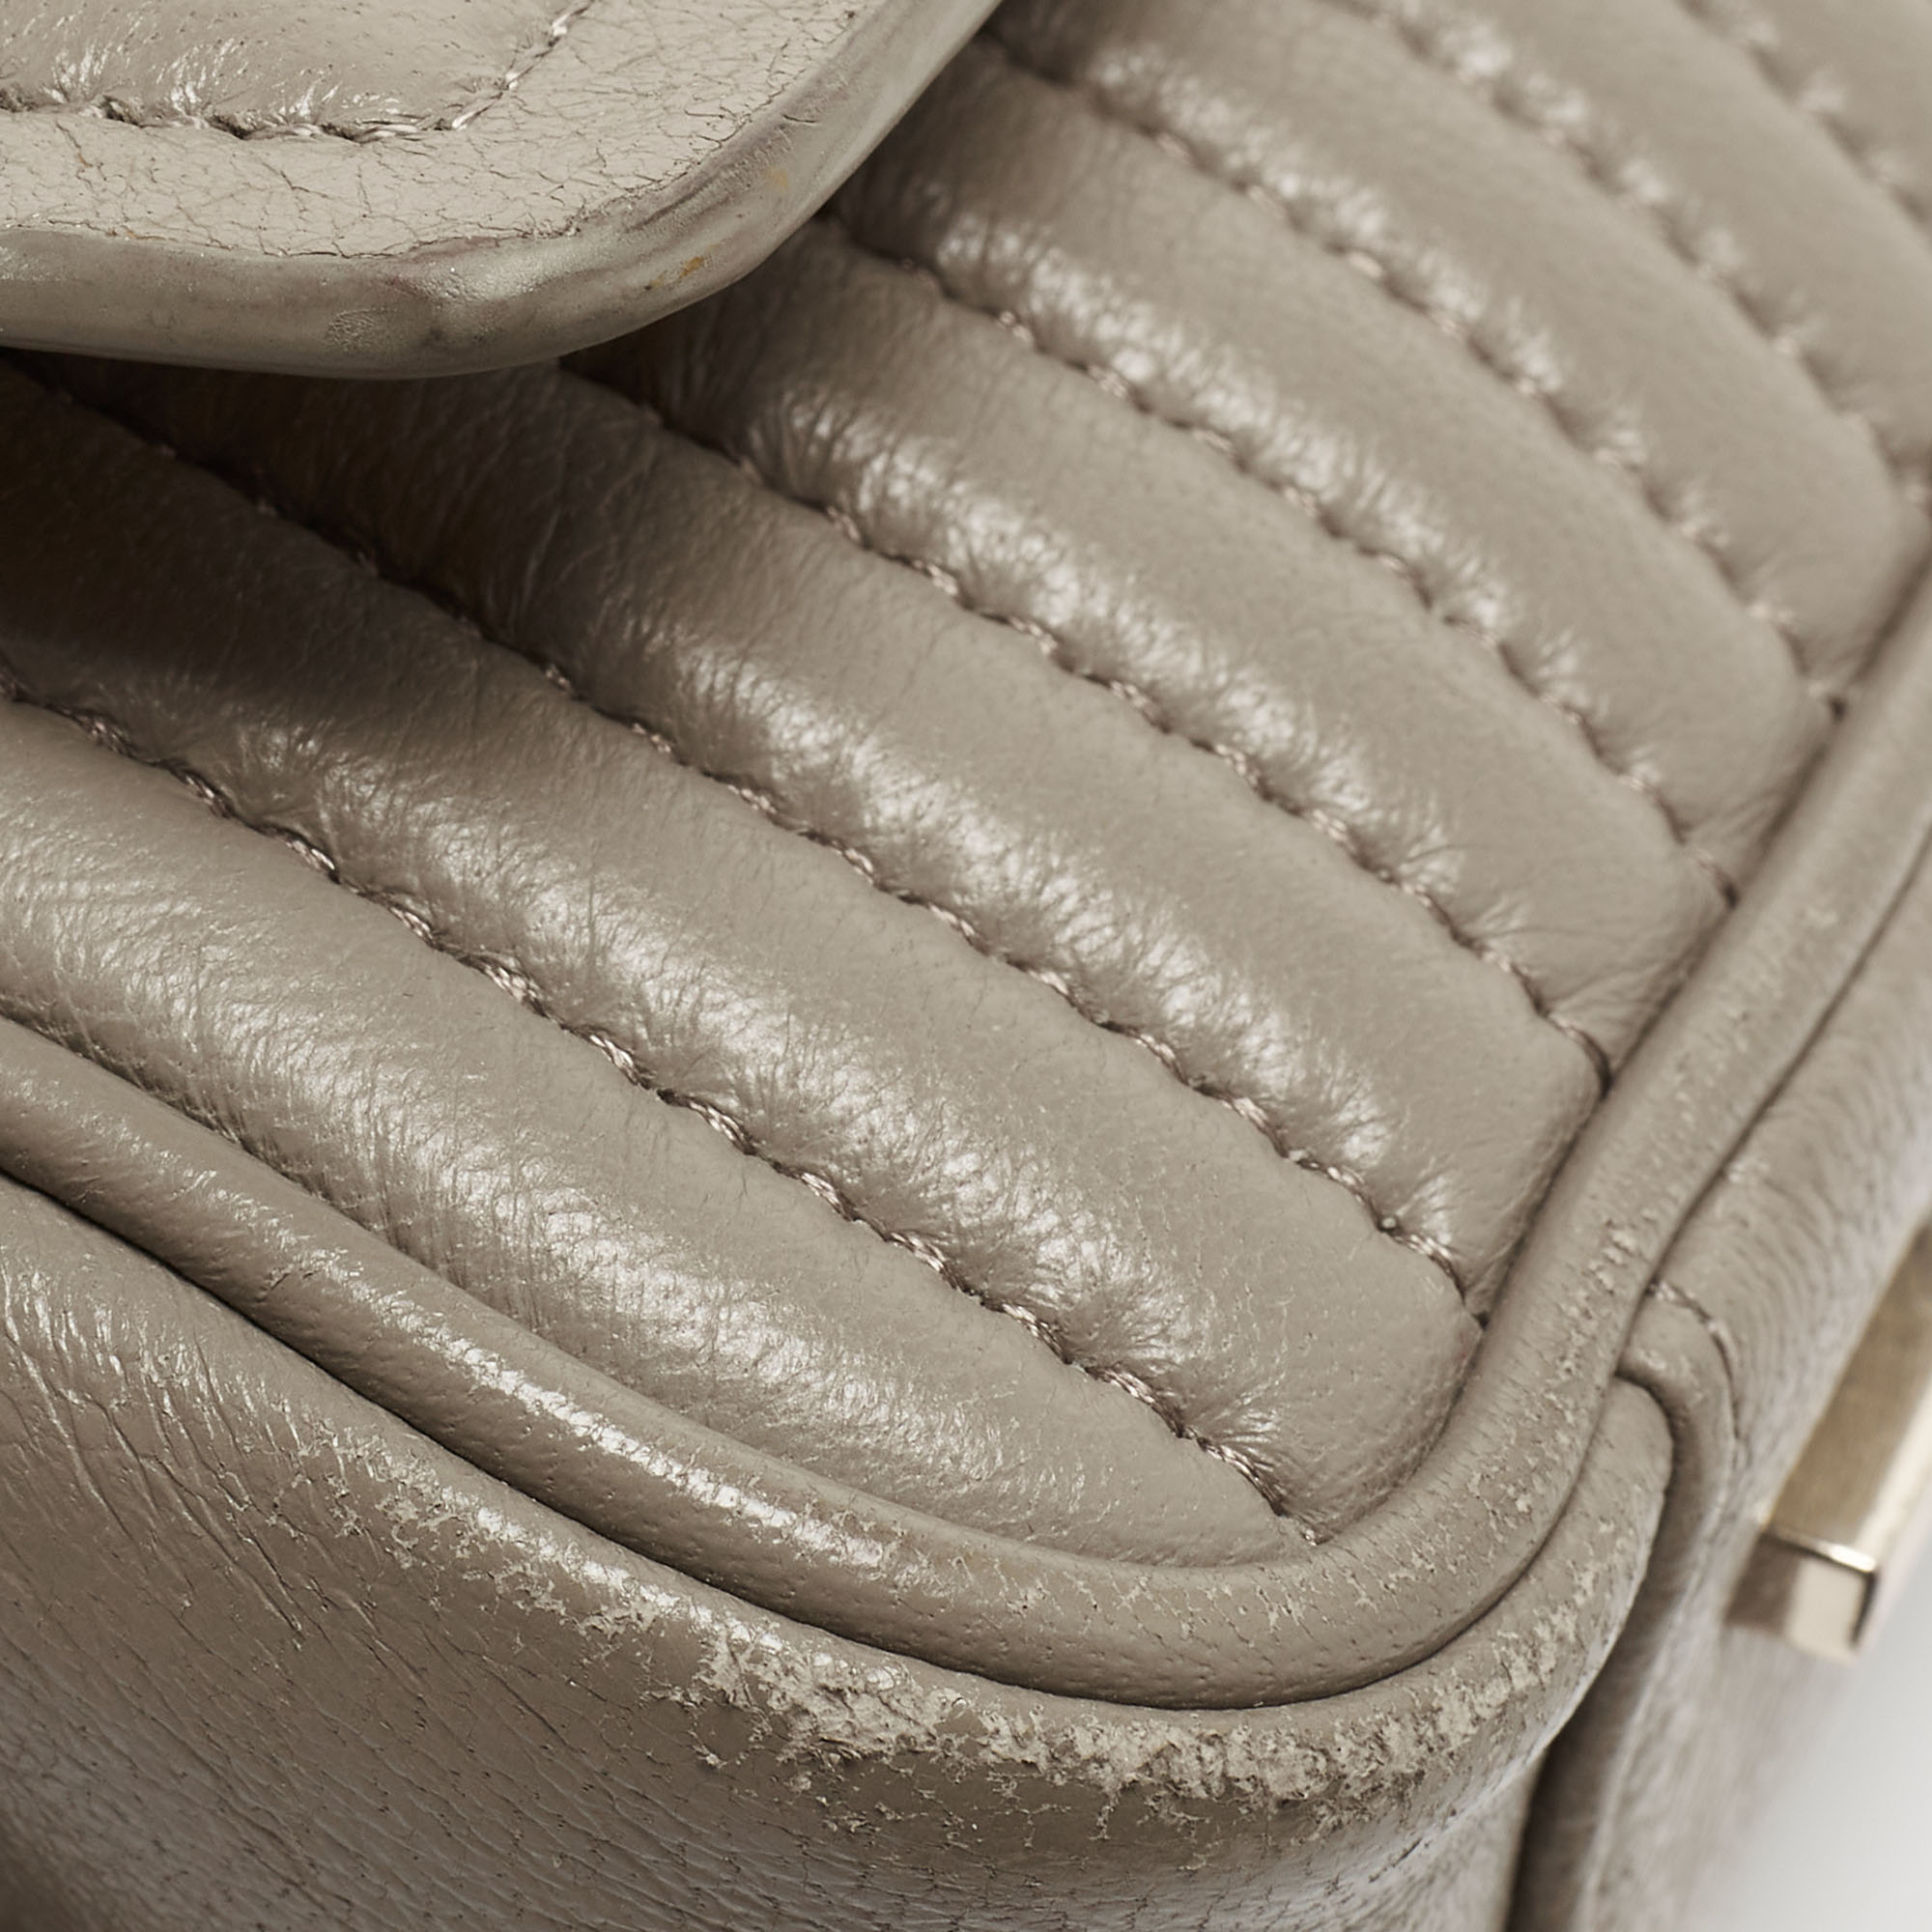 DKNY Grey Pinstripe Quilted Leather Gansevoort Top Handle Bag